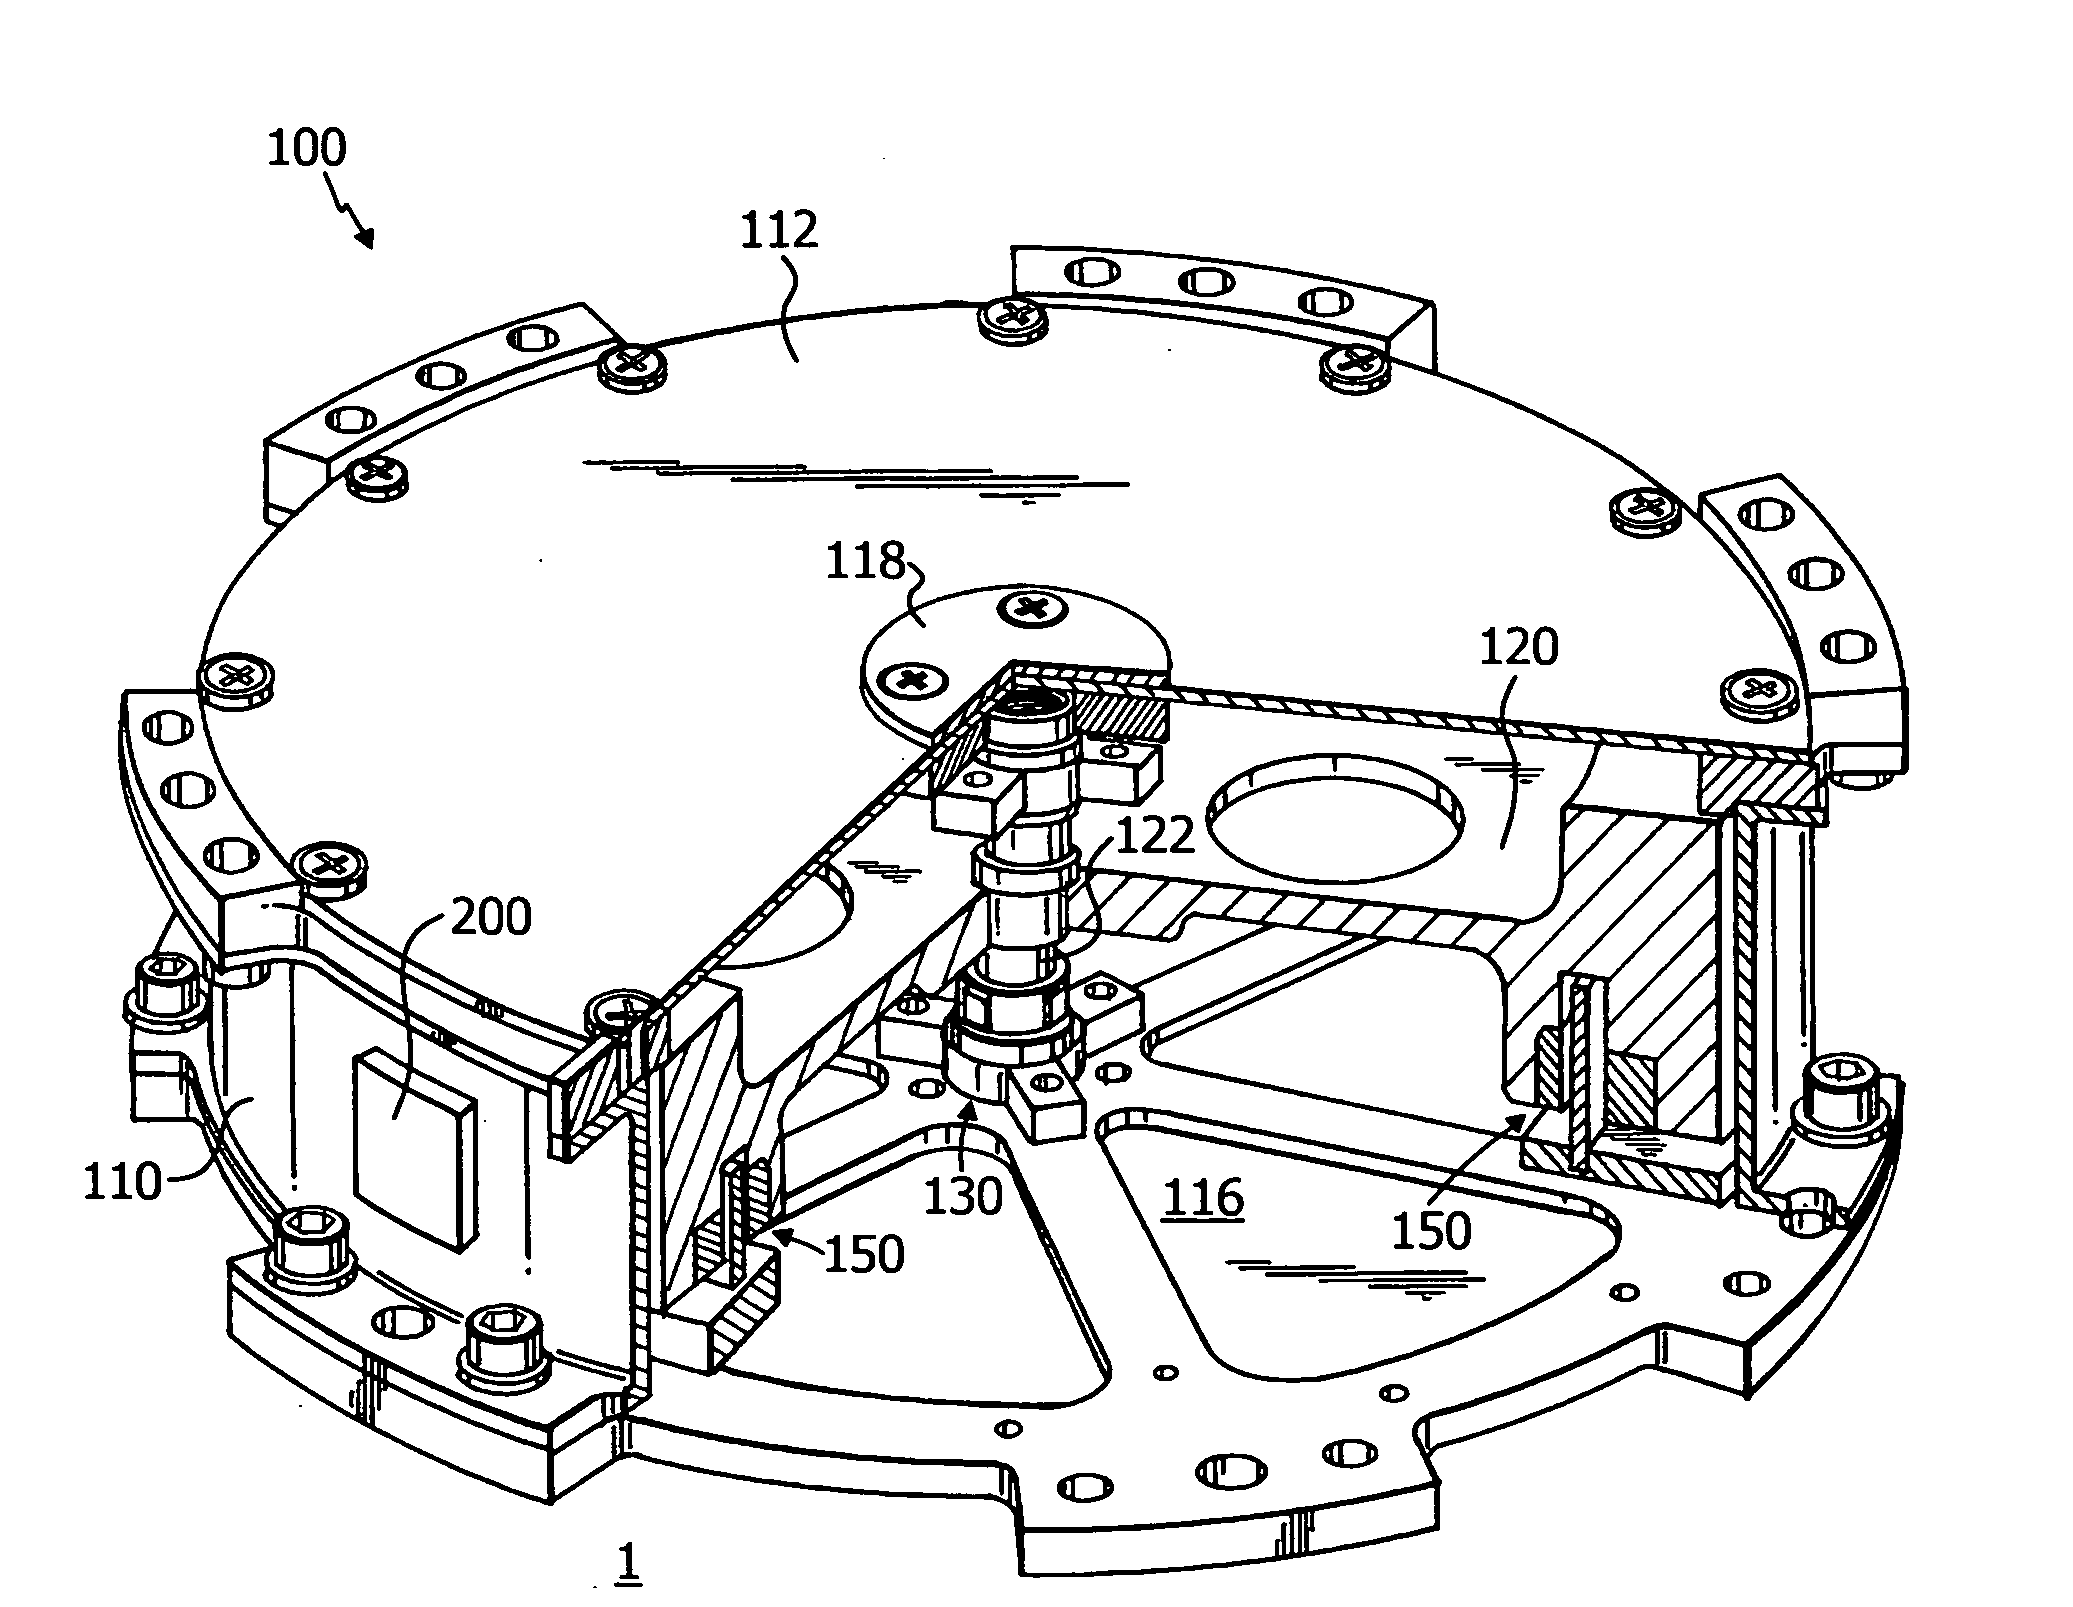 Reconfigurable reaction wheel for spacecraft